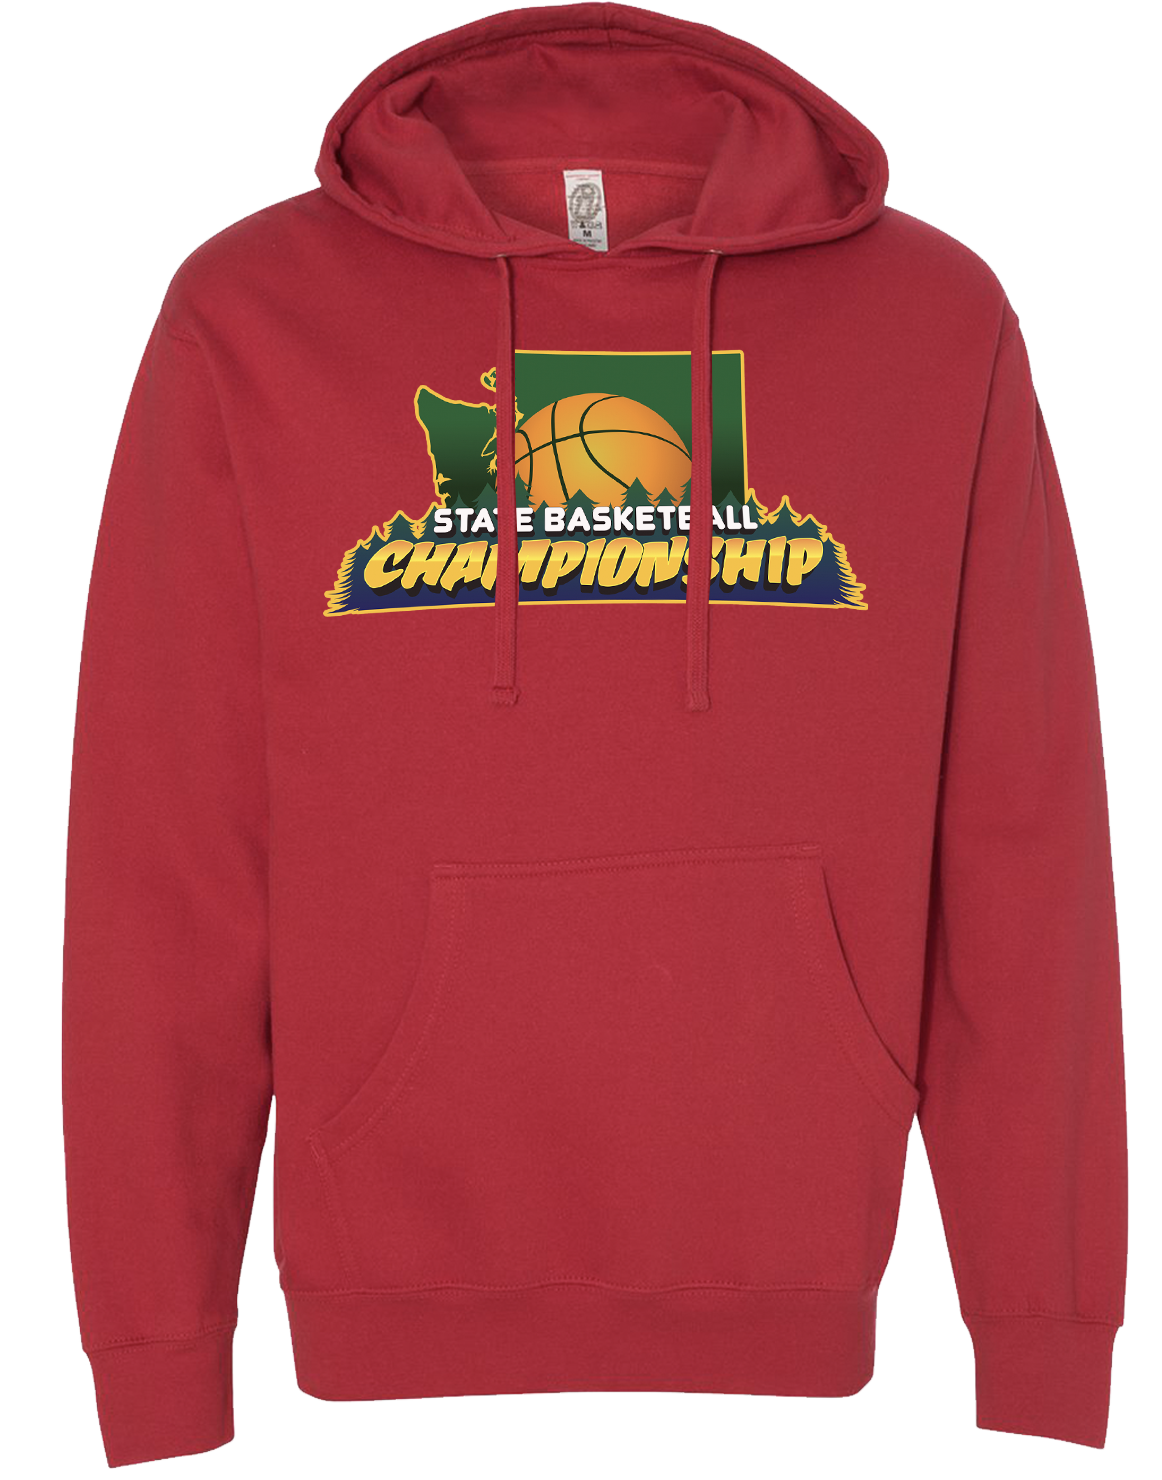 Red Washington State Basketball Sweatshirt